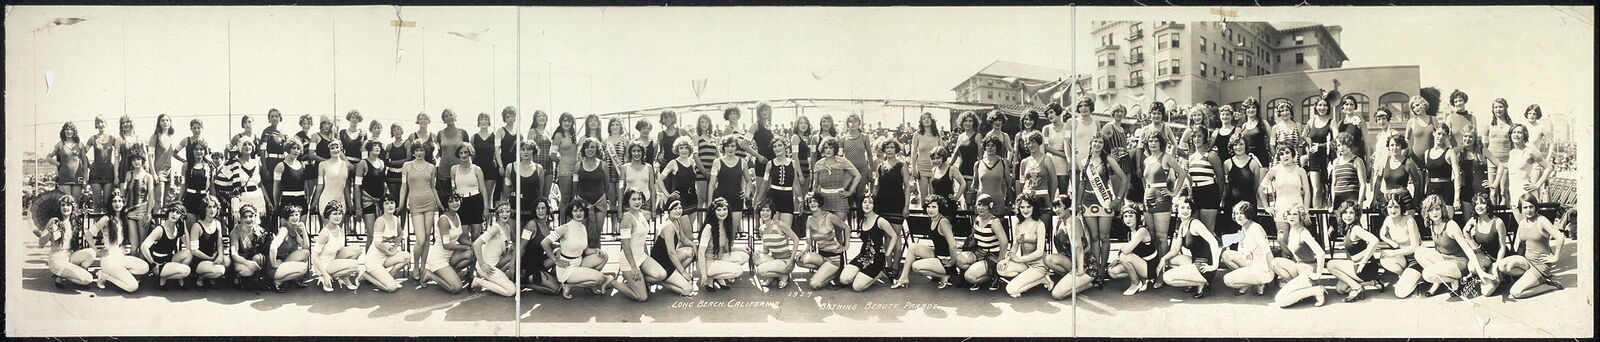 1927 Panoramic: Long Beach,California,Bathing Beauty Parade Contest 2